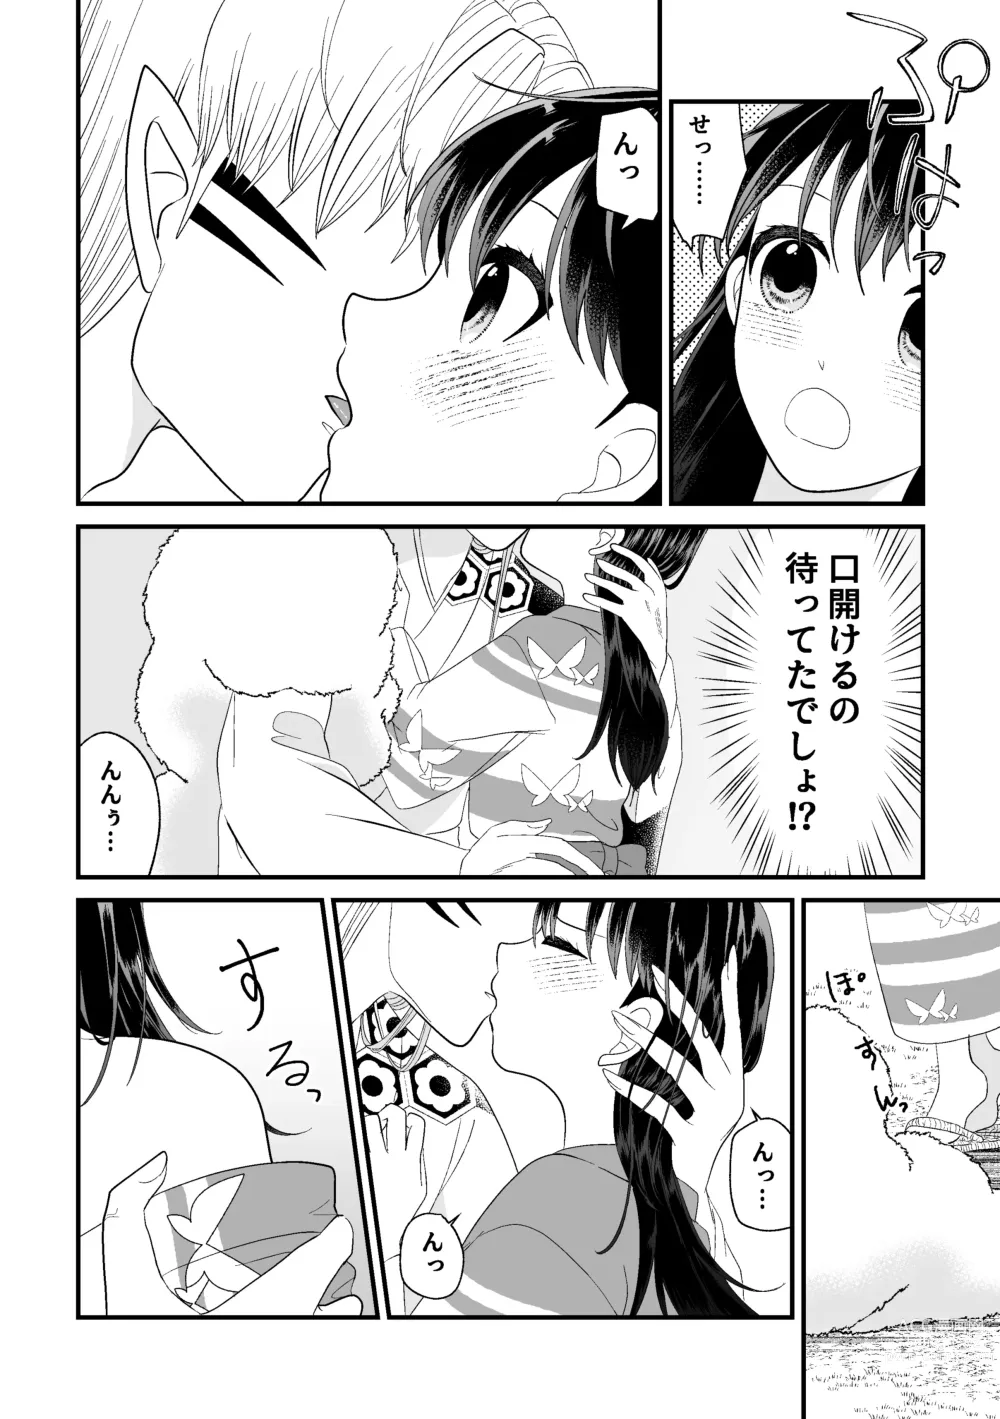 Page 8 of doujinshi Tatoe Sekai ga Chigatte mo